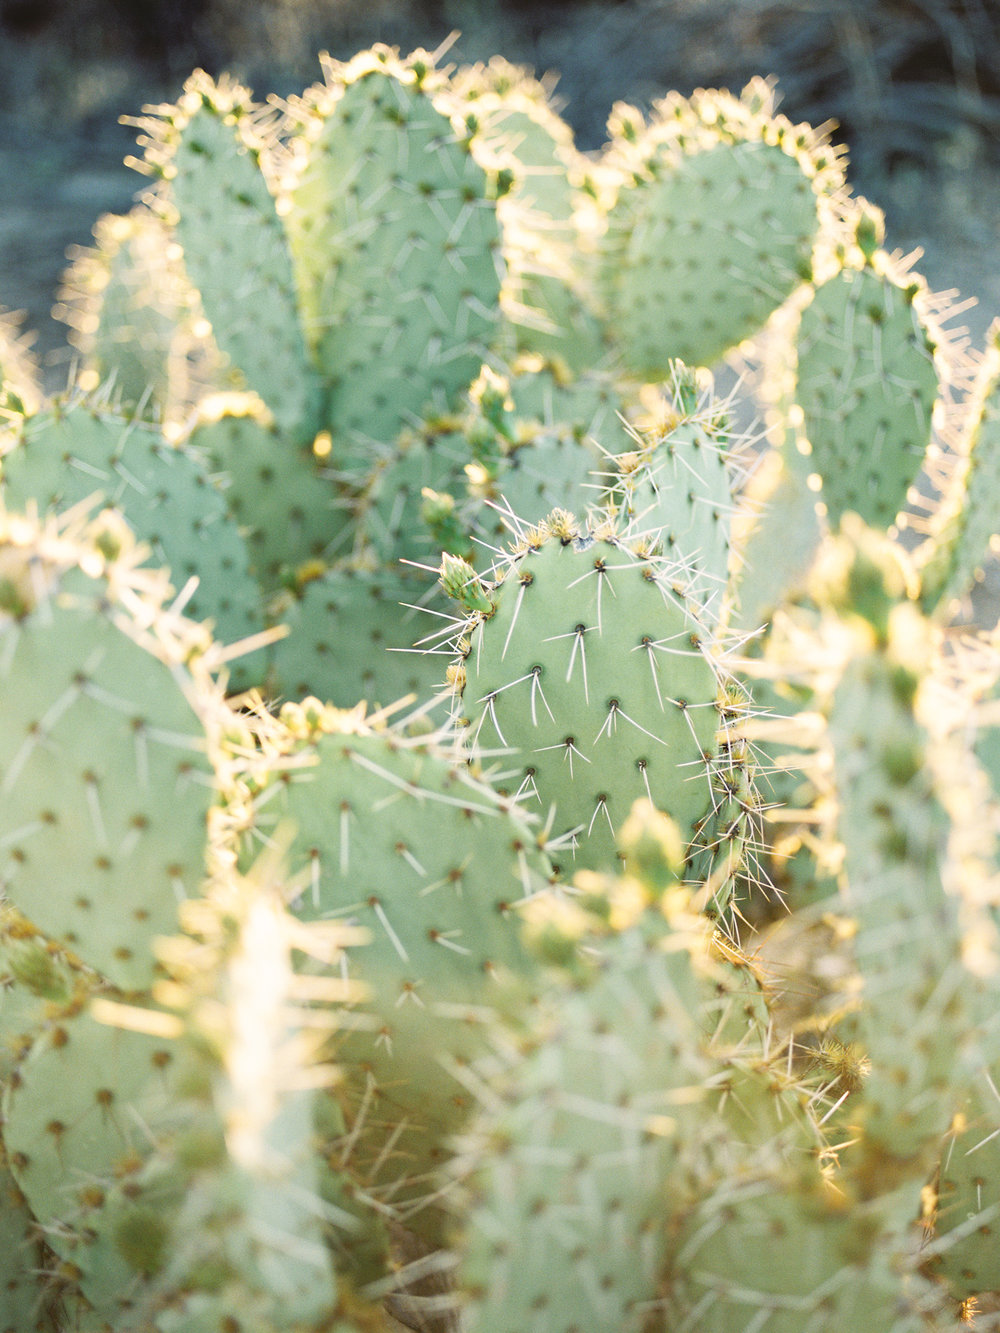  Gorgeous Tucson sunset lighting on prickly pear cactus&nbsp; 